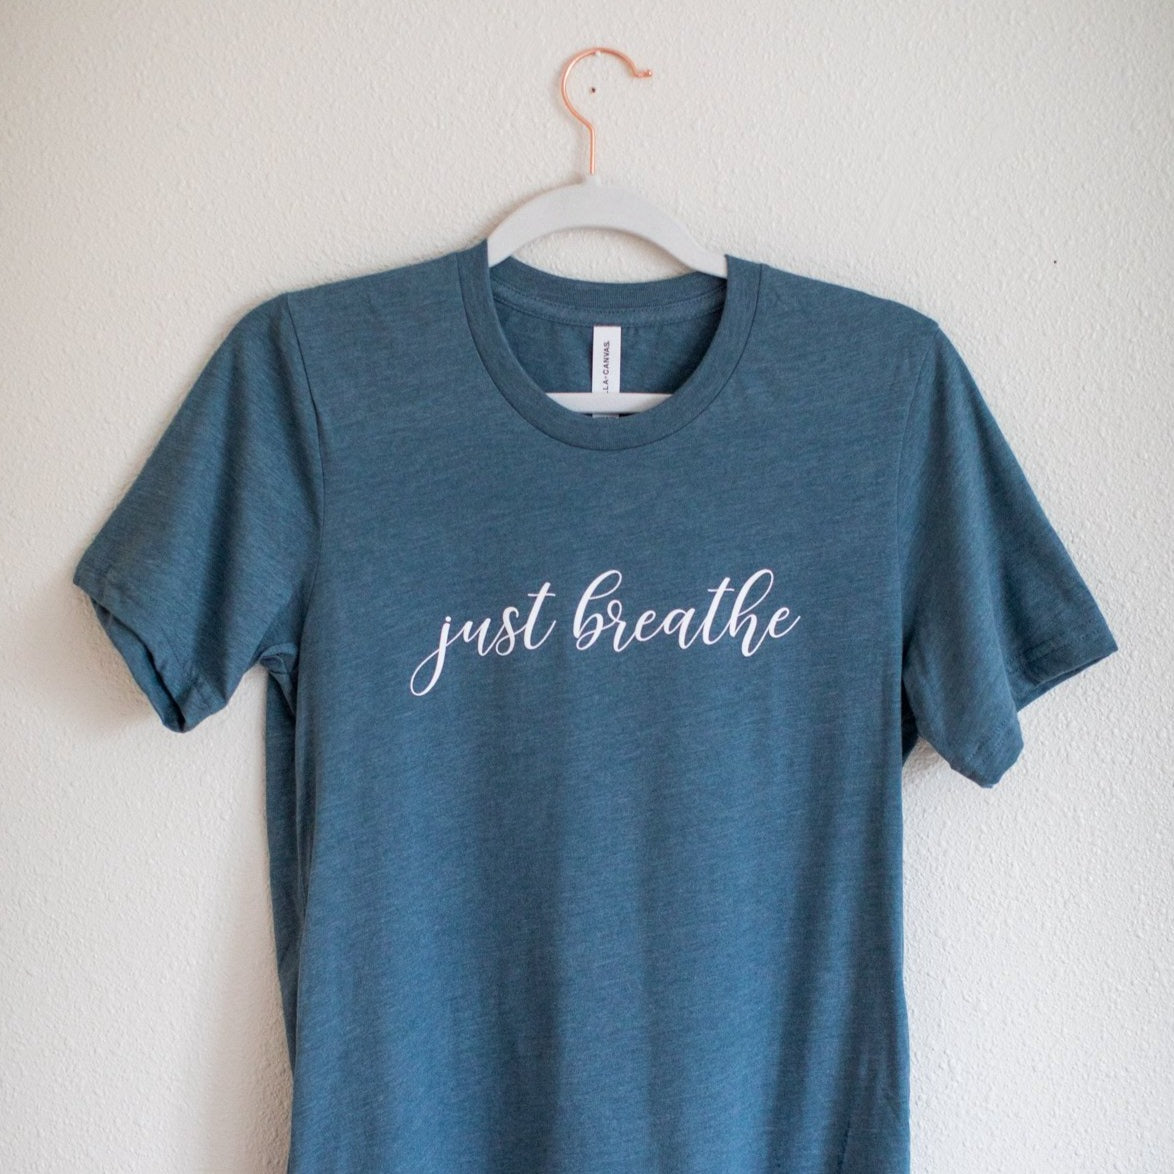 Just Breathe T-Shirt